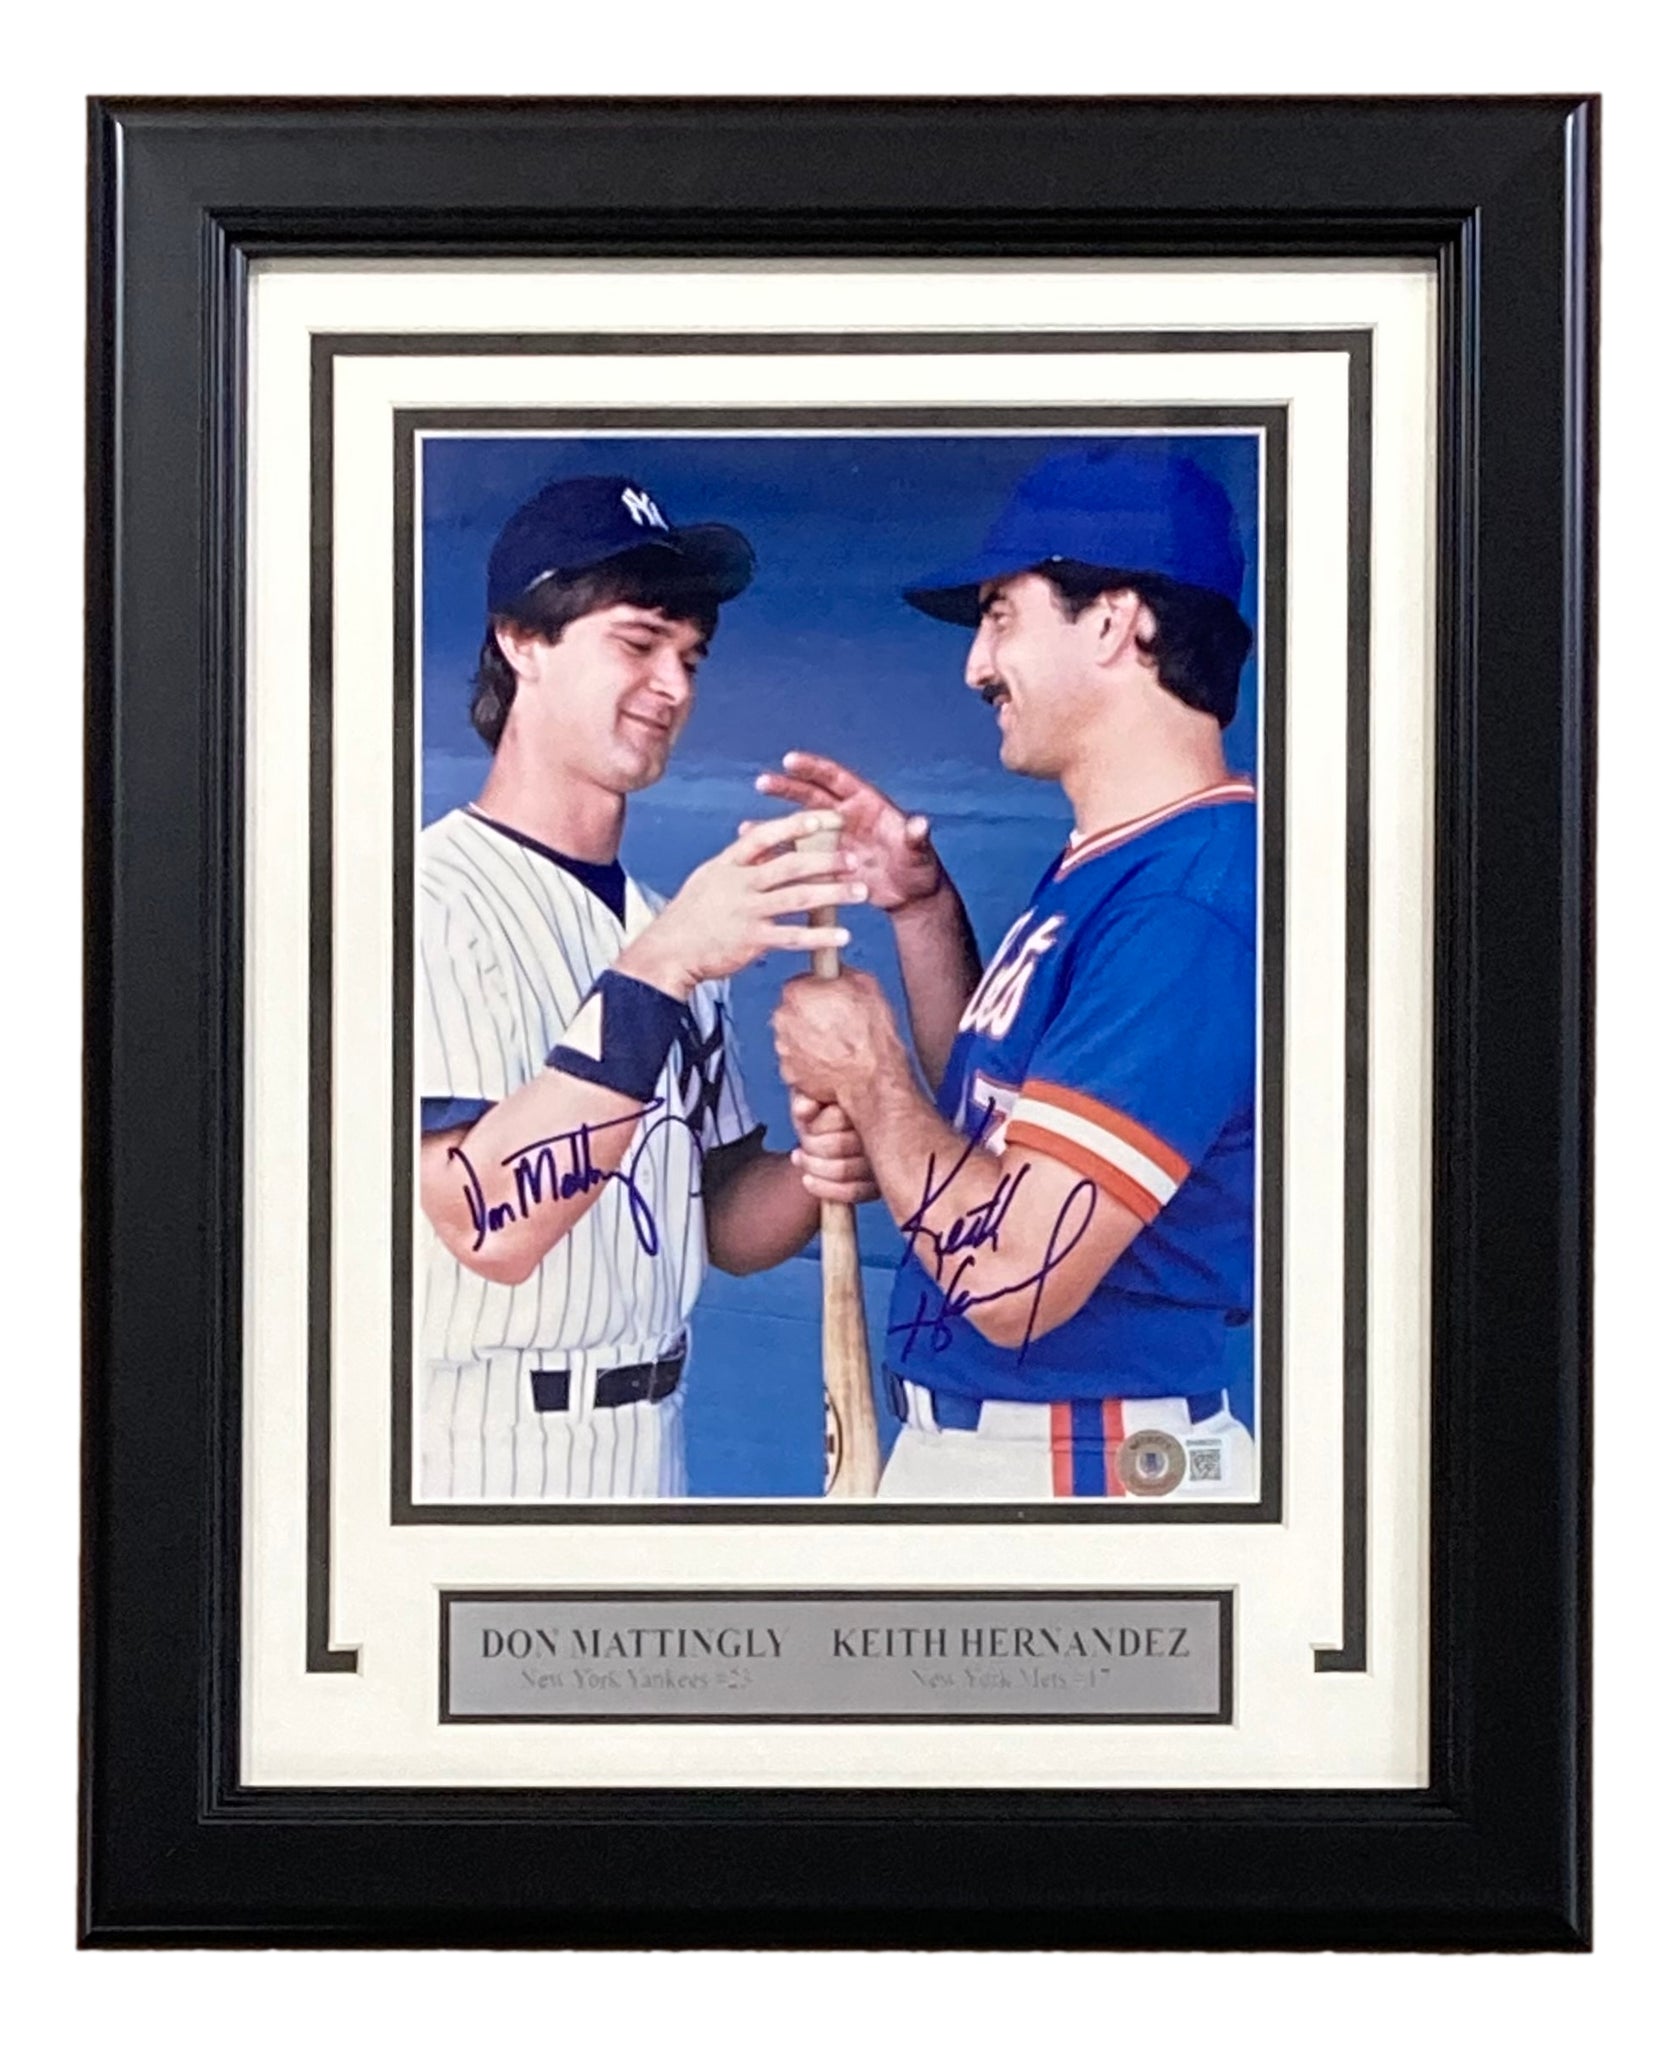 Don Mattingly Keith Hernandez Signed Framed 8x10 MLB Baseball Photo BAS